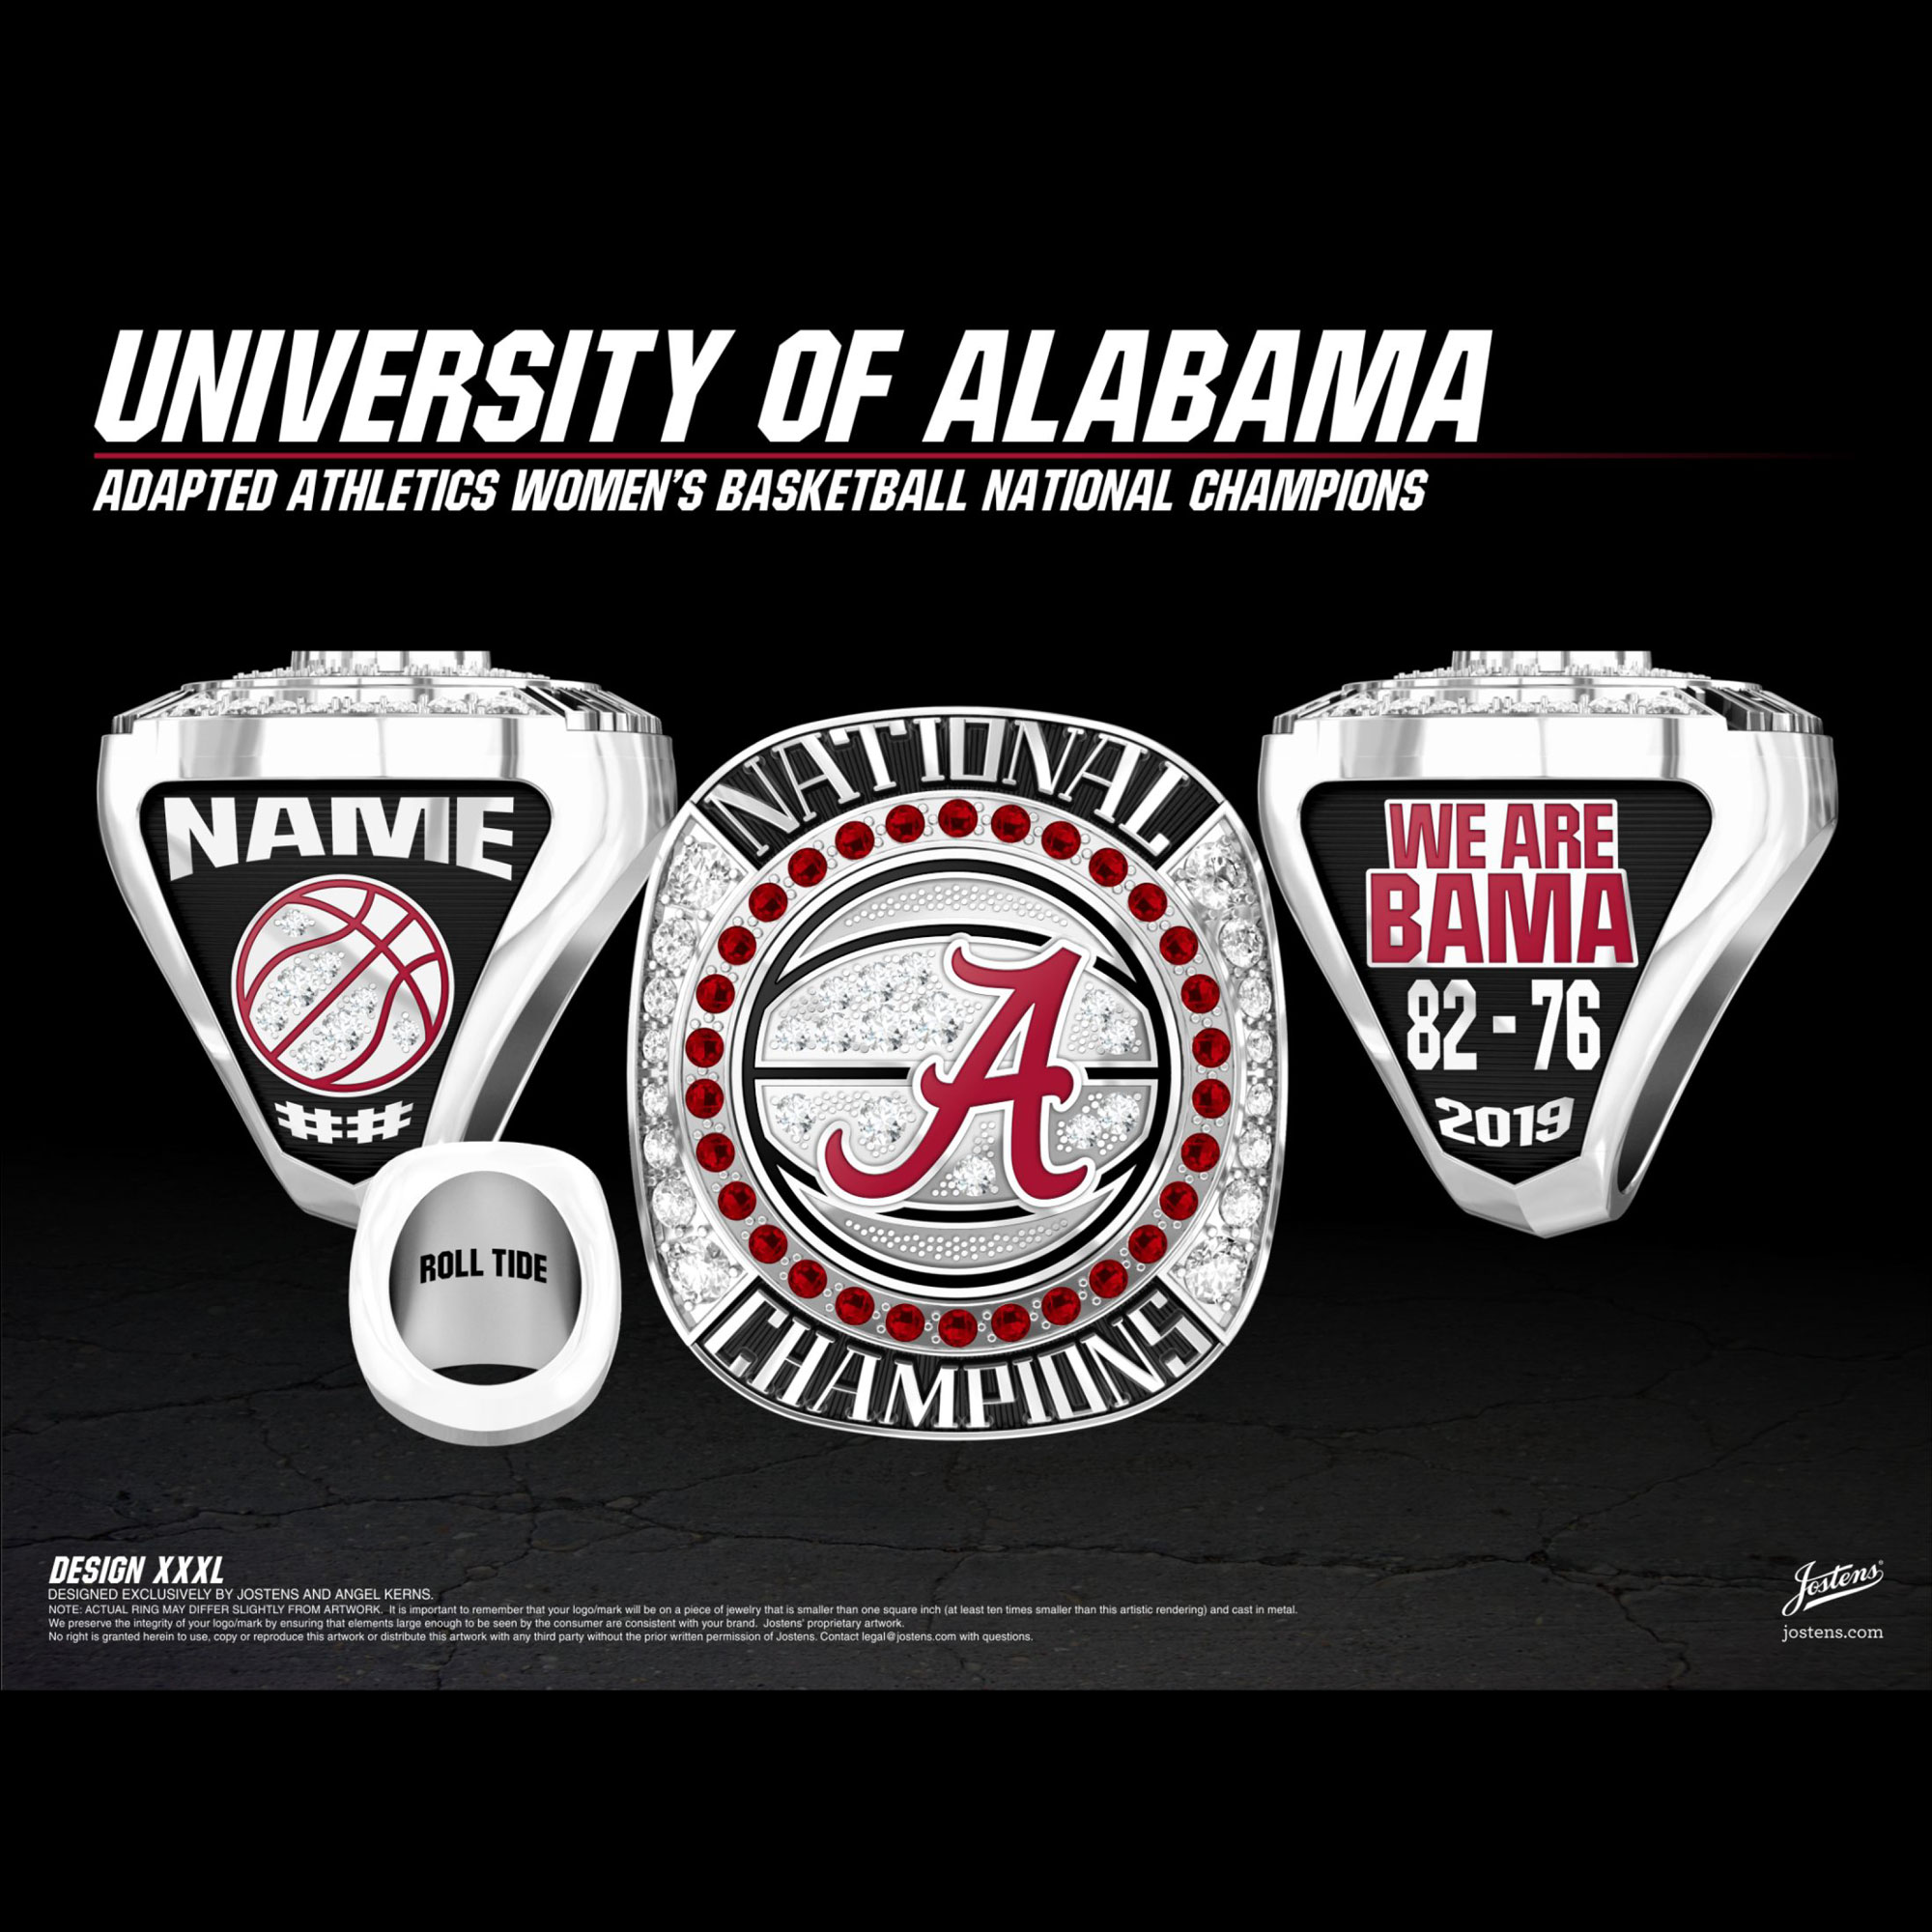 University of Alabama Women's Basketball 2019 Adapted Athletics National Championship Ring